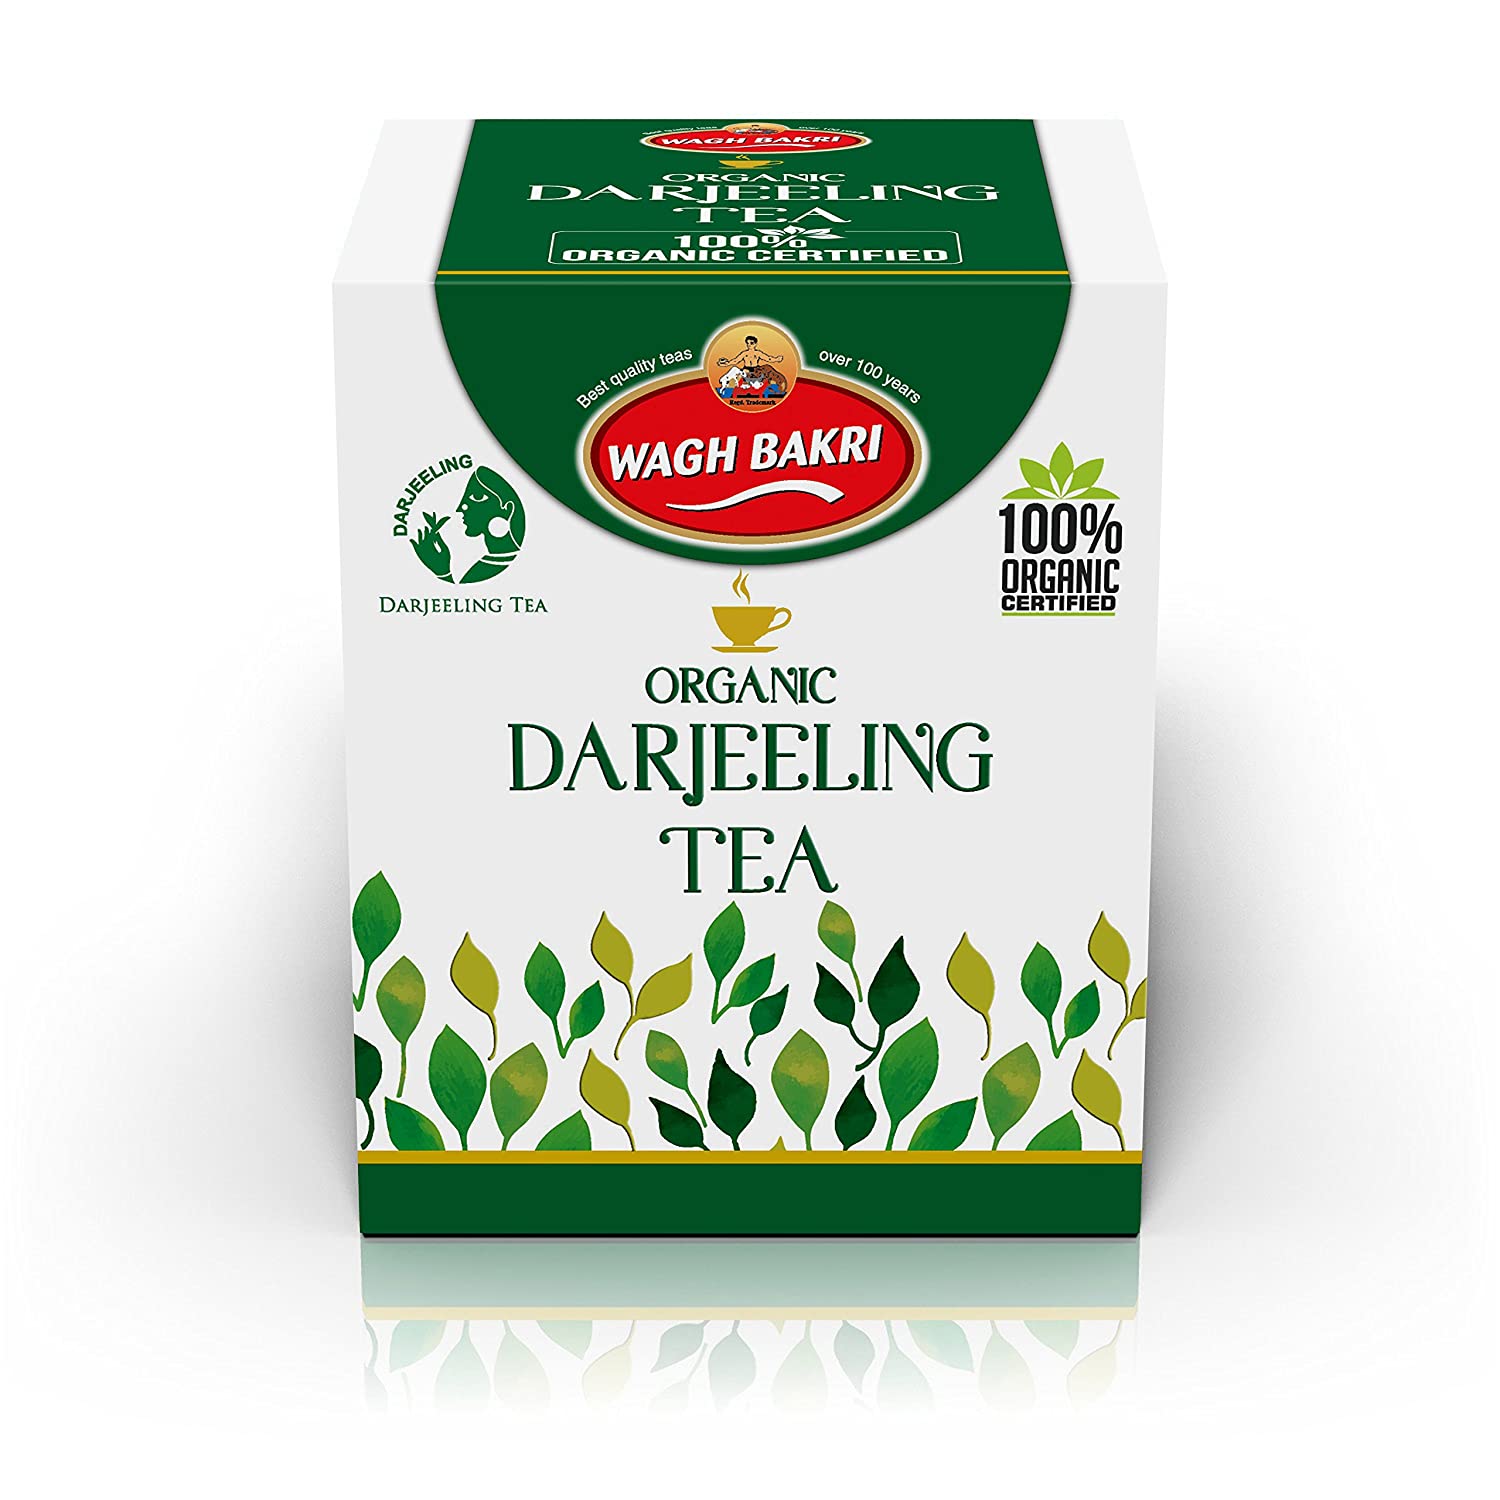 Wagh Bakri Darjeeling Tea Image